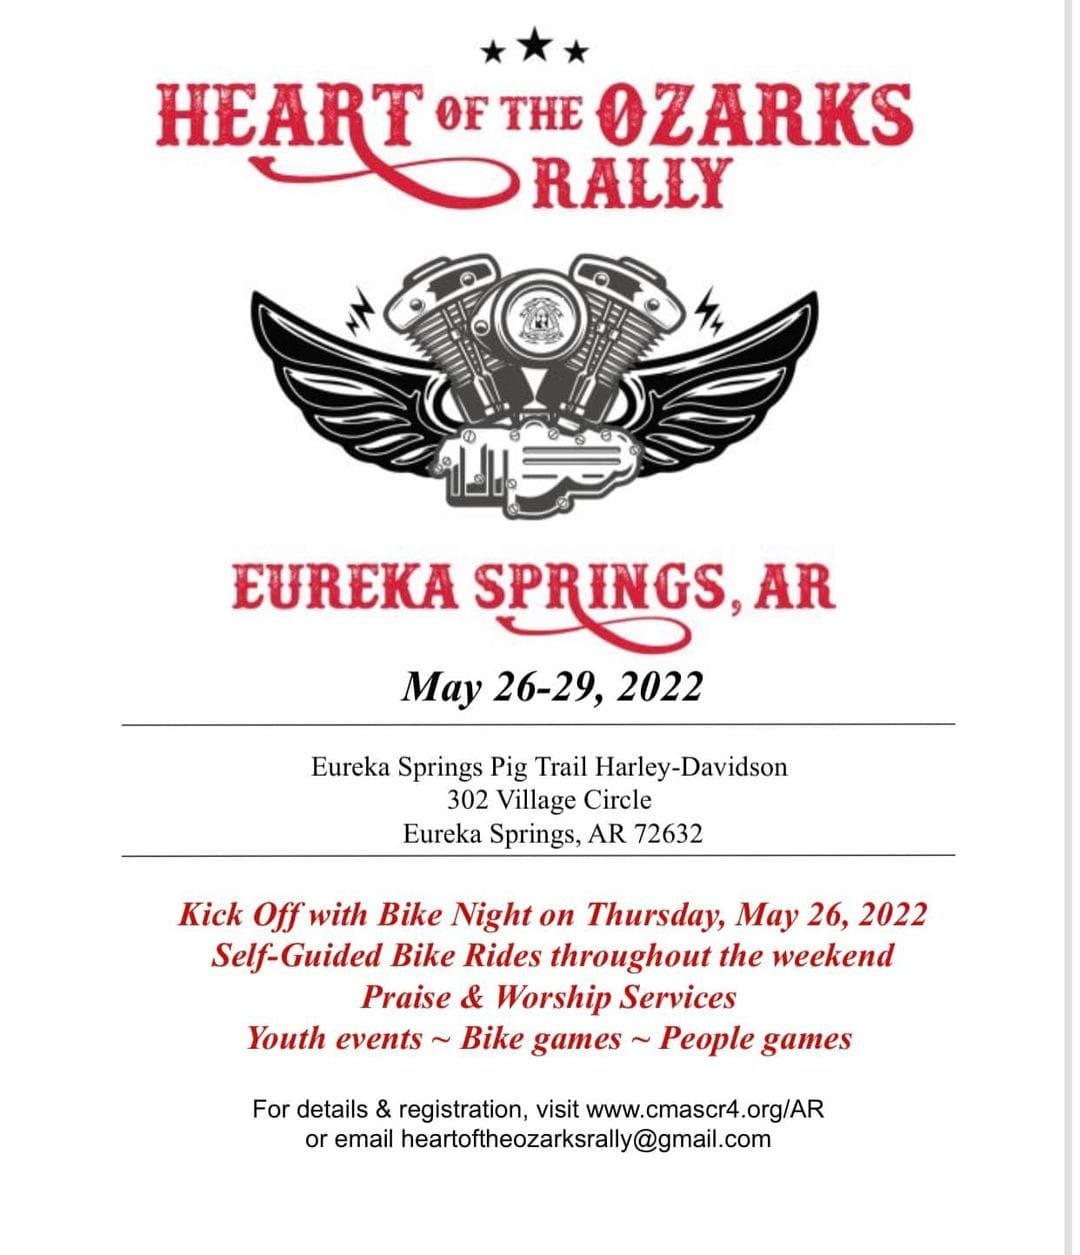 Eureka Springs Rally CMA this weekend Harley Davidson Forums